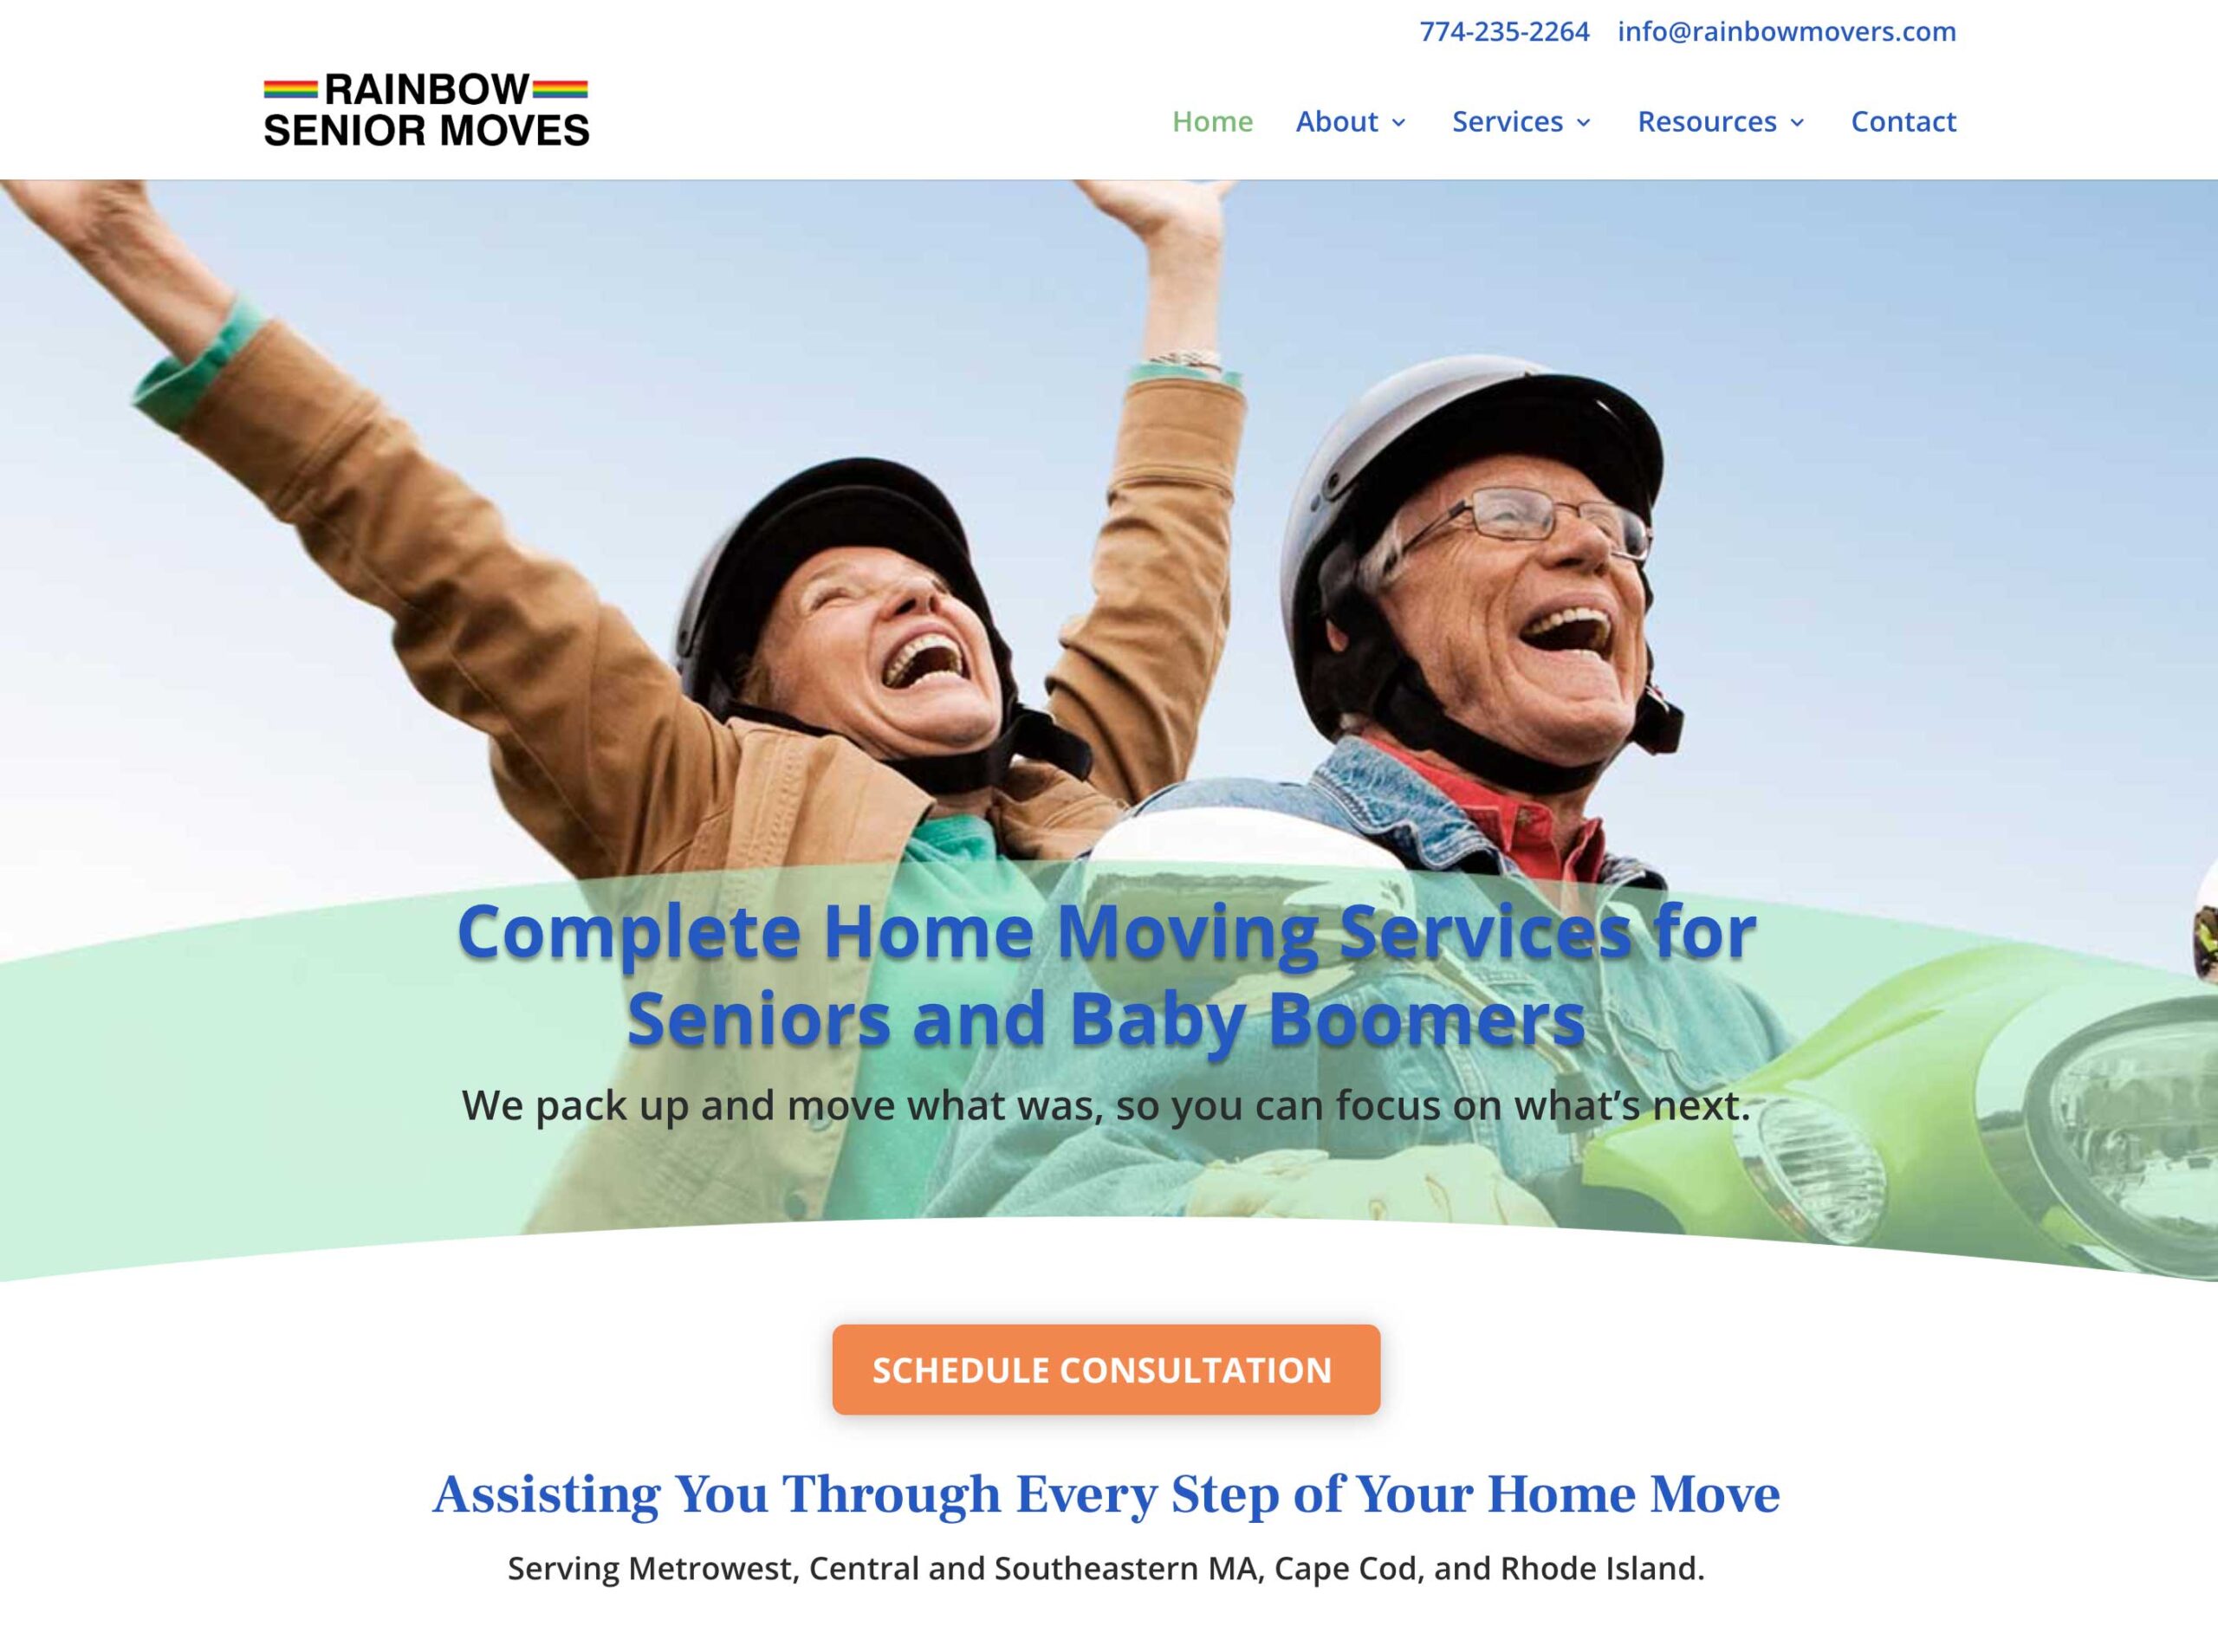 Rainbow Senior Moves website